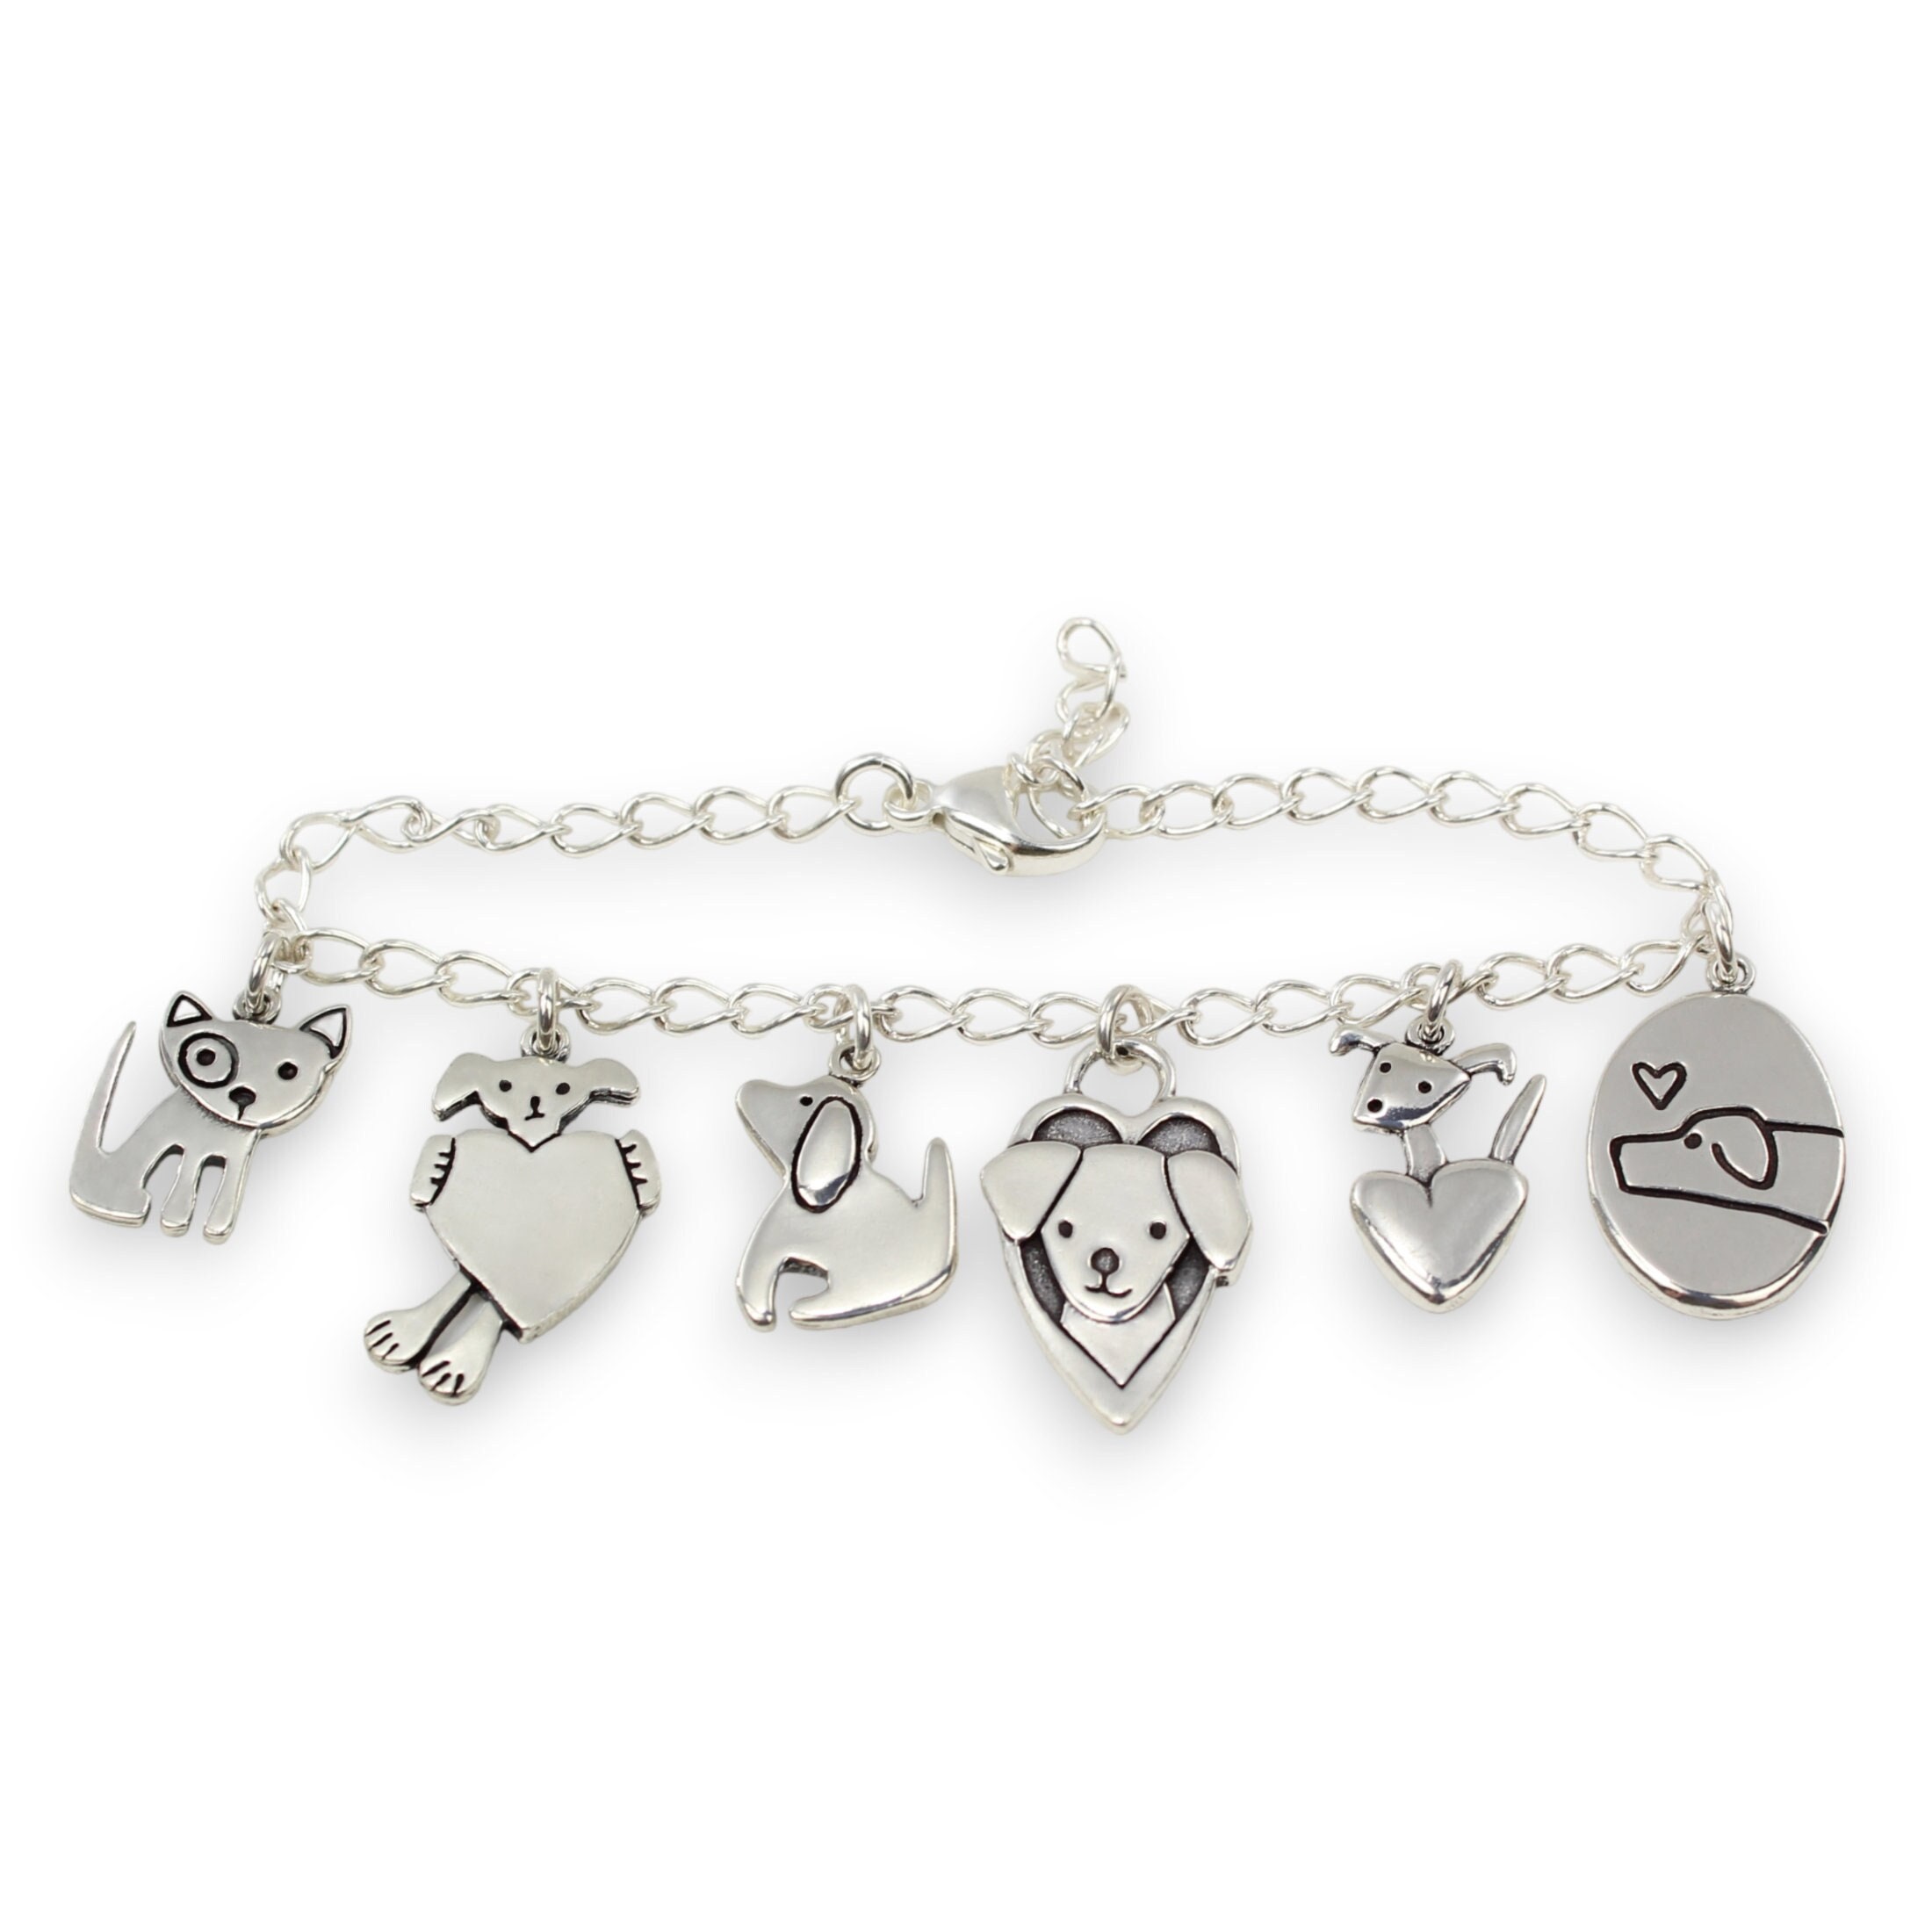 Dog Charm Bracelet - 100% Sterling Silver - Charm Bracelet with Six Dog Charms - Adjustable and Adorablethumbnail